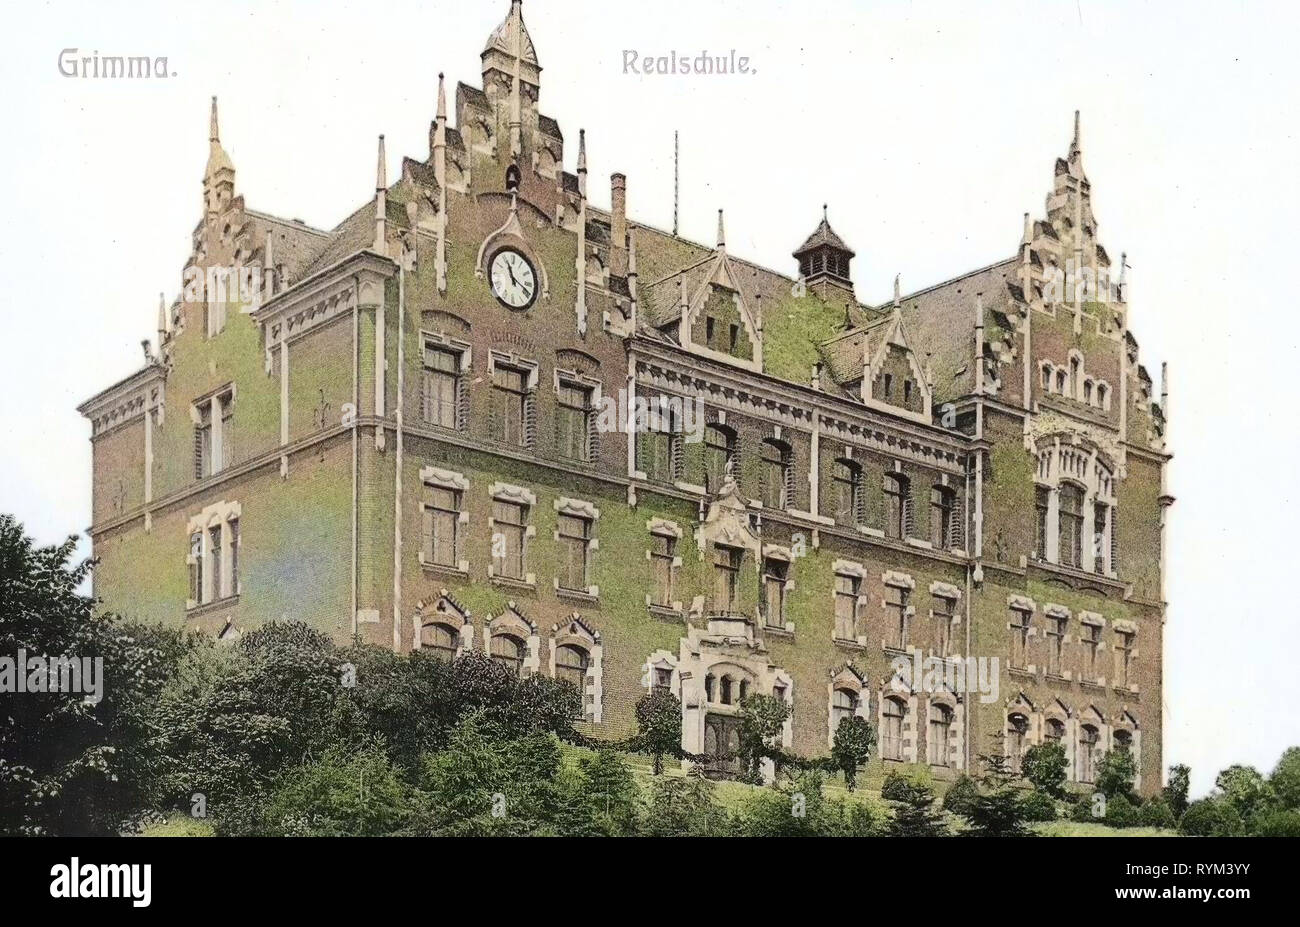 Schools in Landkreis Leipzig, Grimma, 1908, Landkreis Leipzig, Realschule, Germany Stock Photo